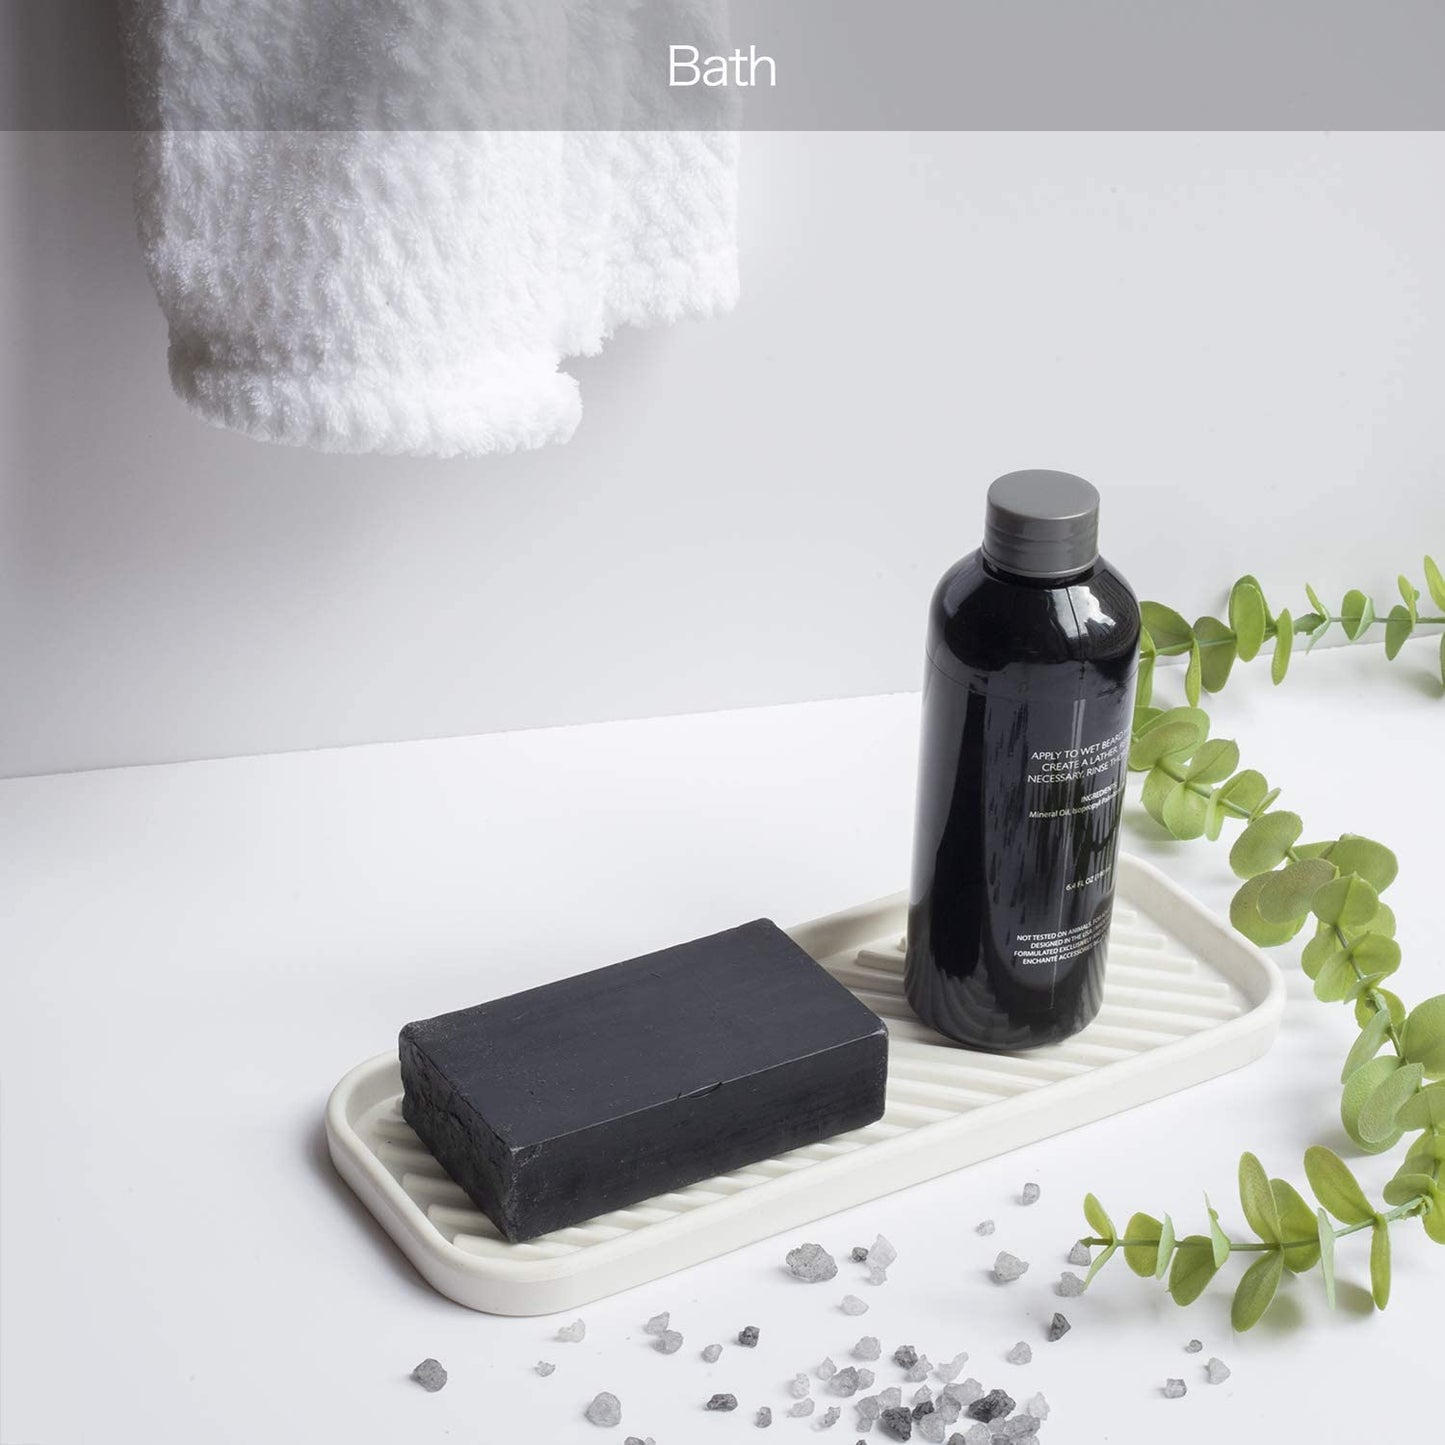 Social Clean Silicone Sponge Holder - Kitchen Sponge Holder, Silicone Soap Tray, Dishwashing Soap Holder (Black)